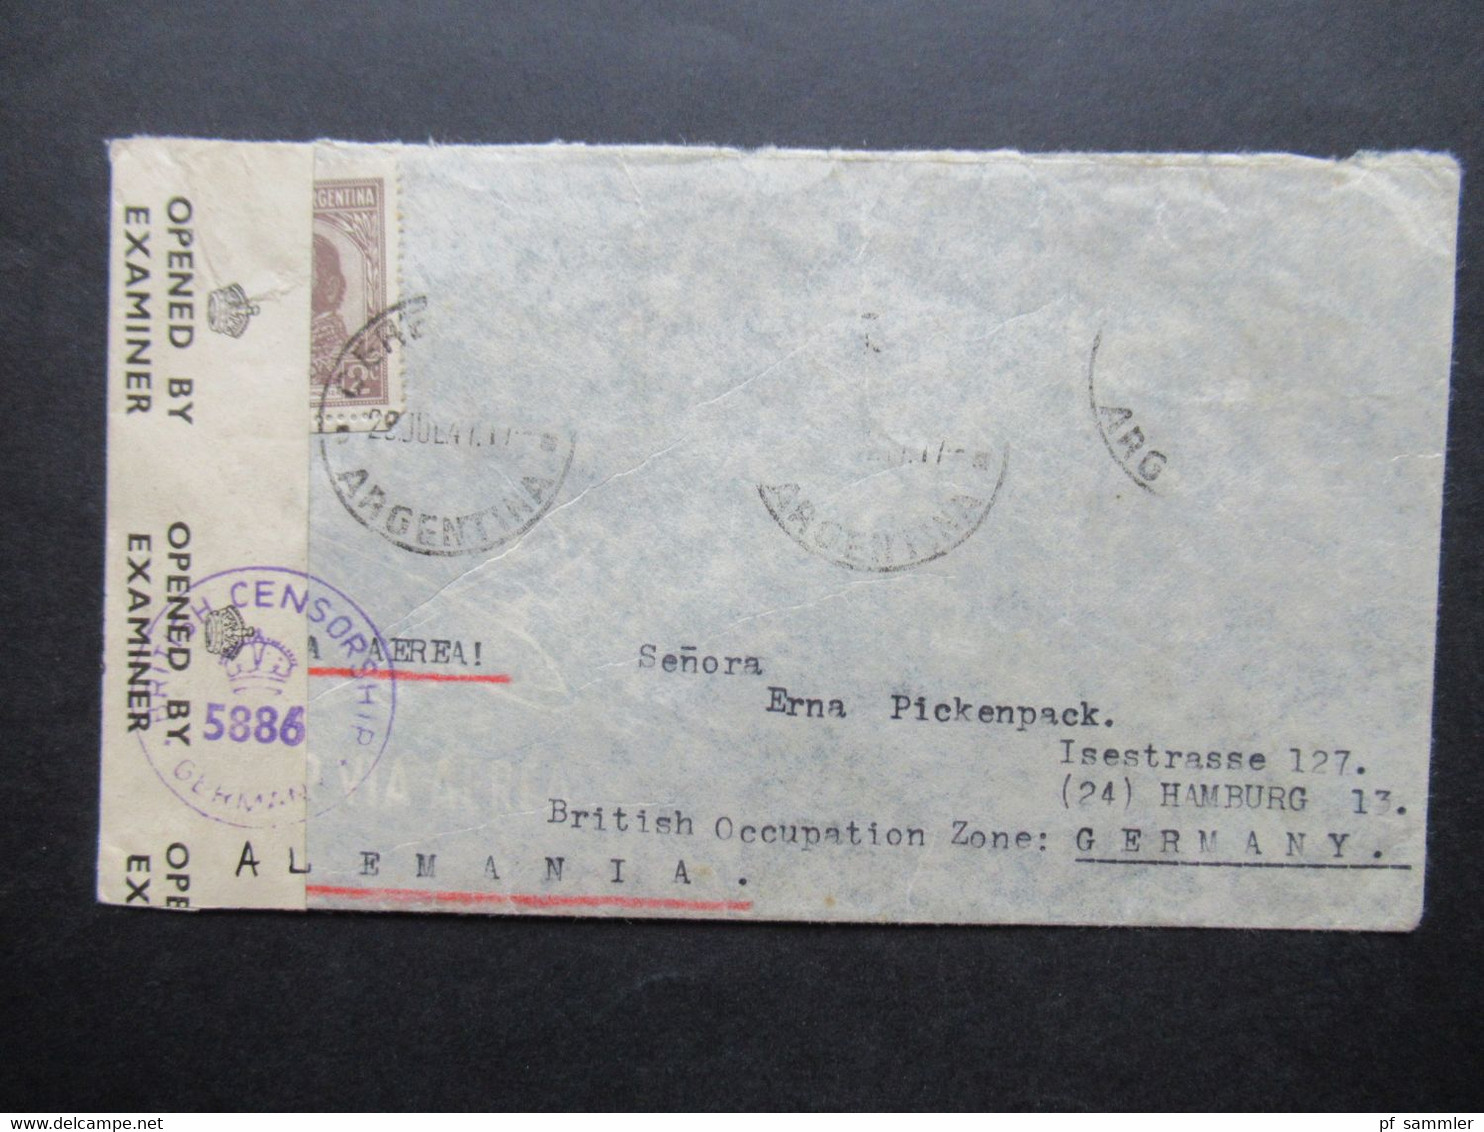 Argentinien 1947 Zensurbeleg An Frau Pickenpack In Hamburg Opened By Examiner 1172 Und British Censorship Germany - Cartas & Documentos